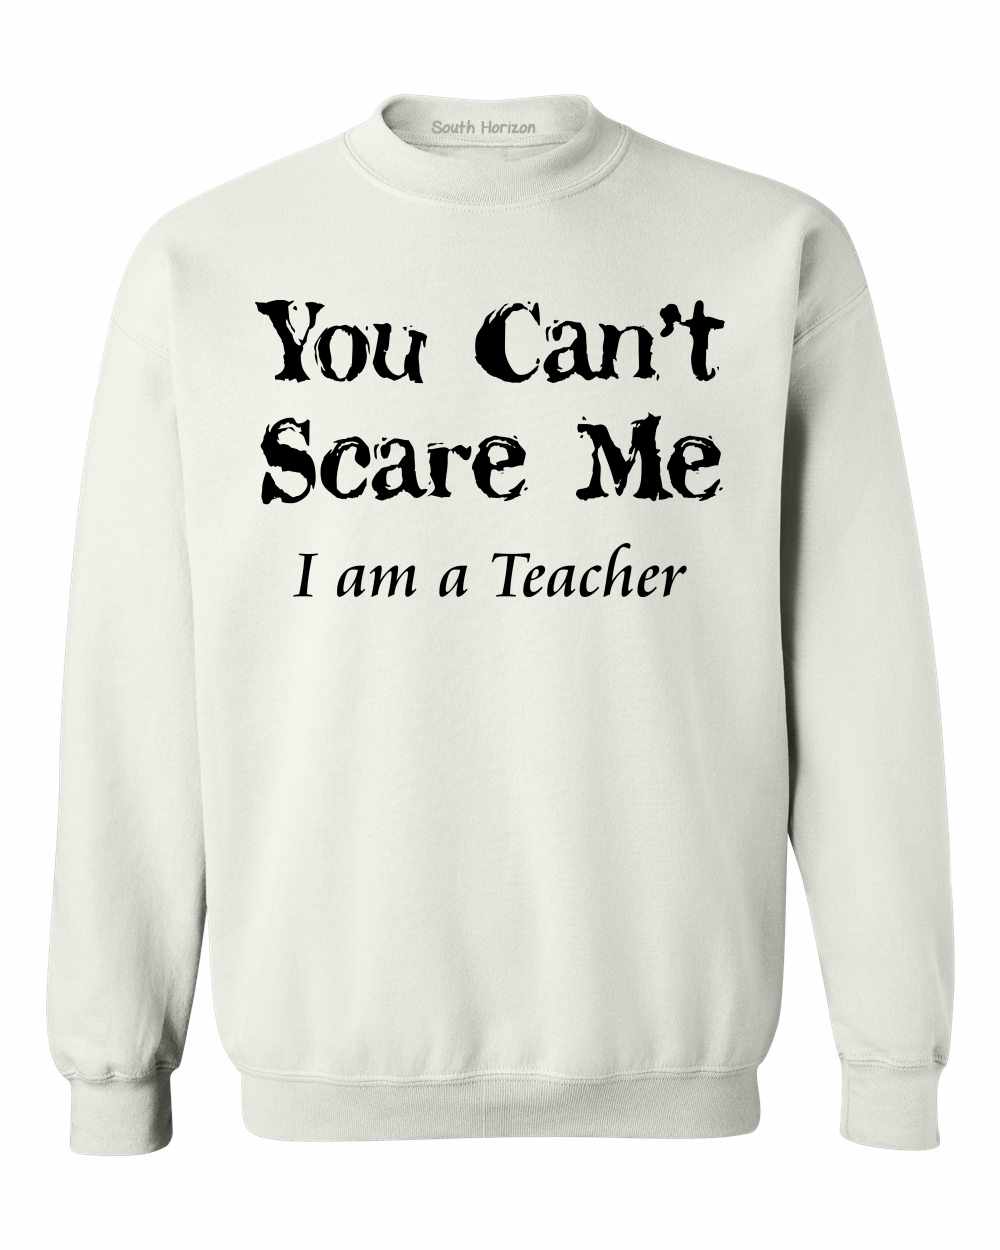 You Can't Scare Me I am a Teacher on SweatShirt (#848-11)